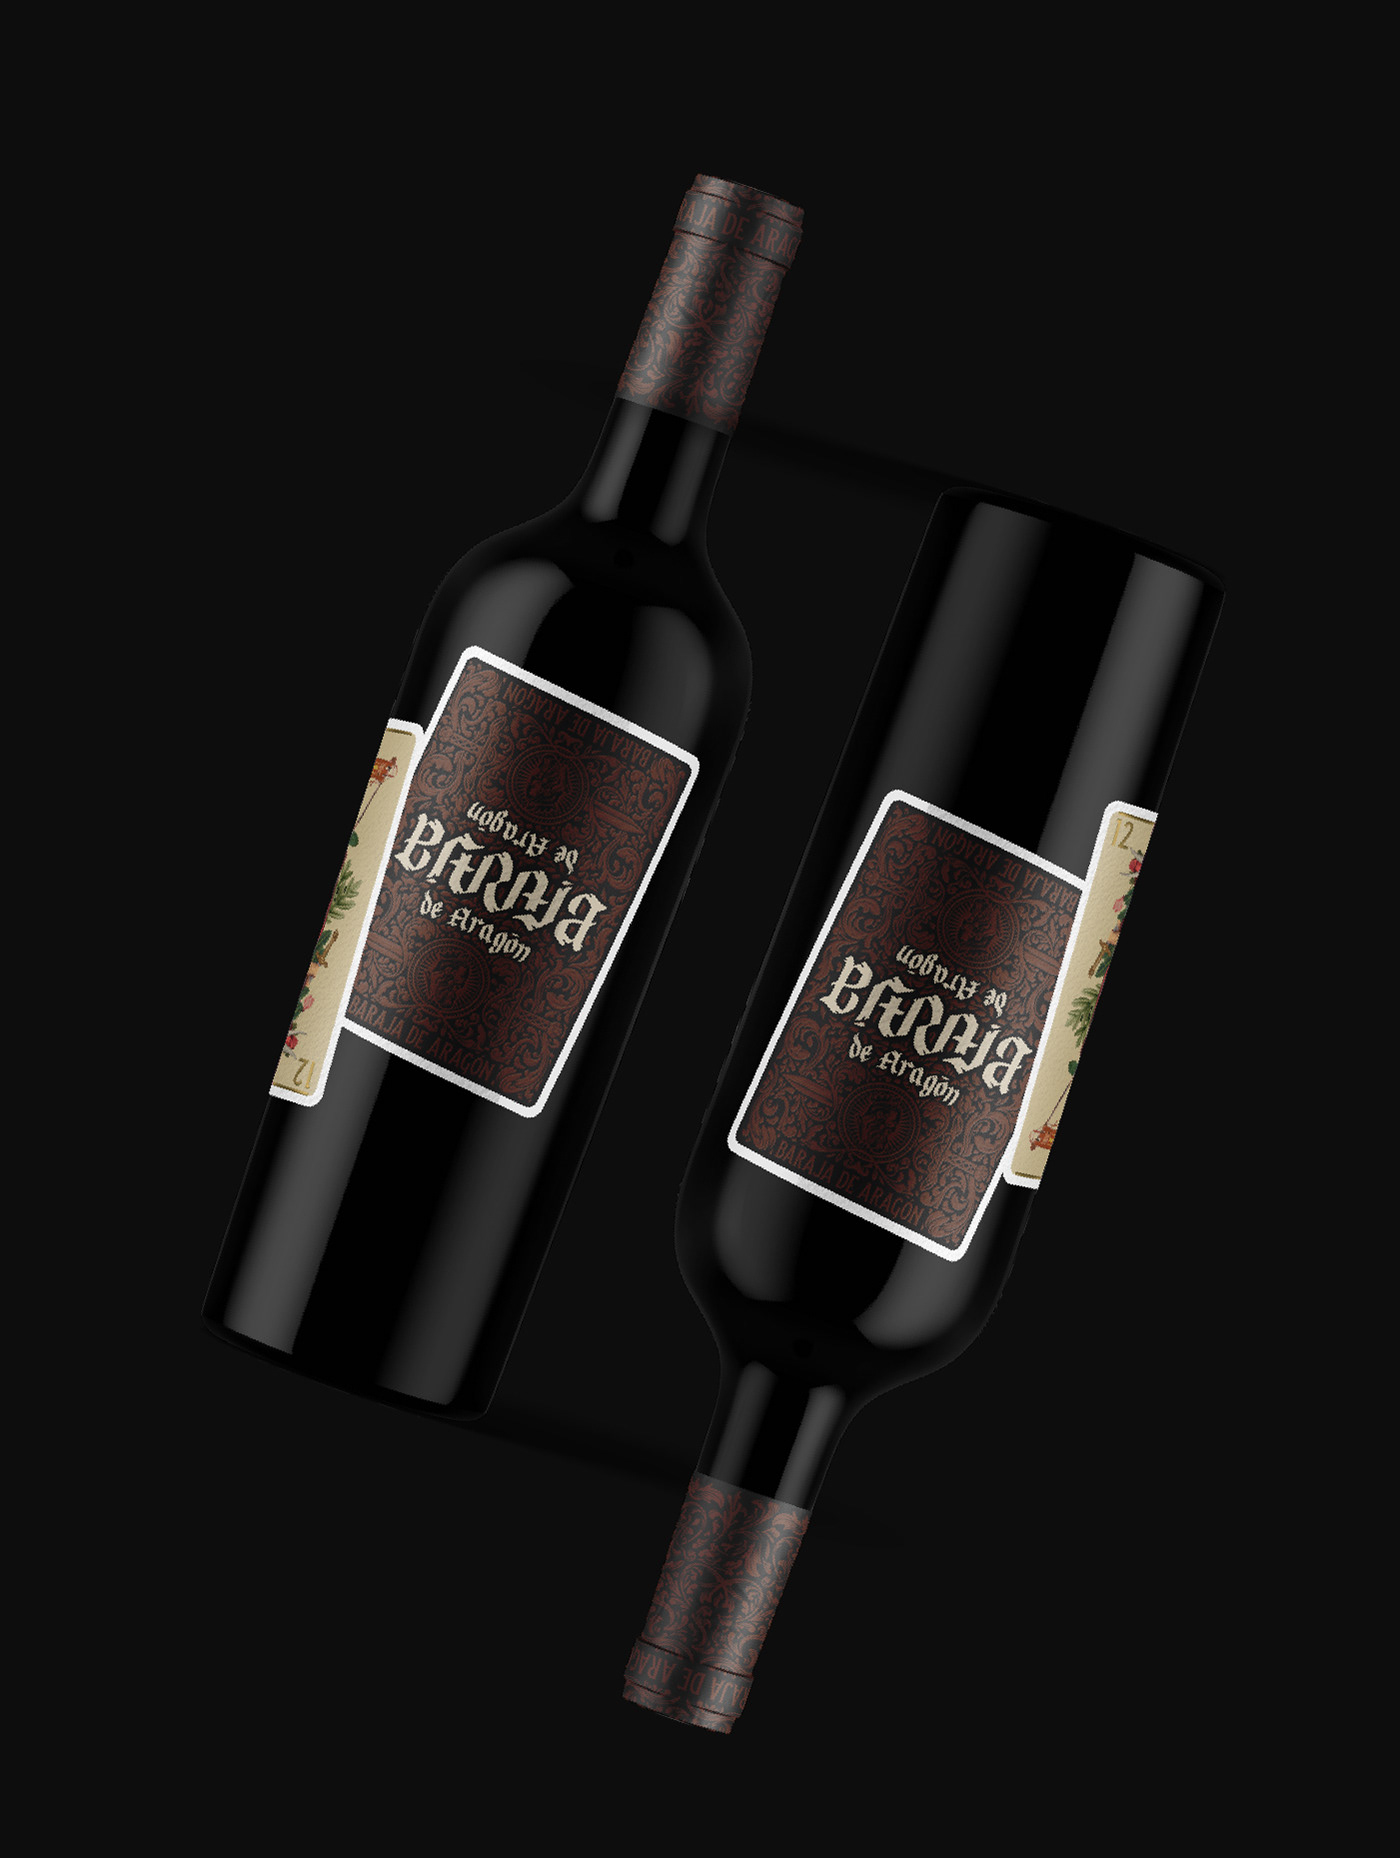 Aragon argo Baraja cards españa king naipe spain wine wine label